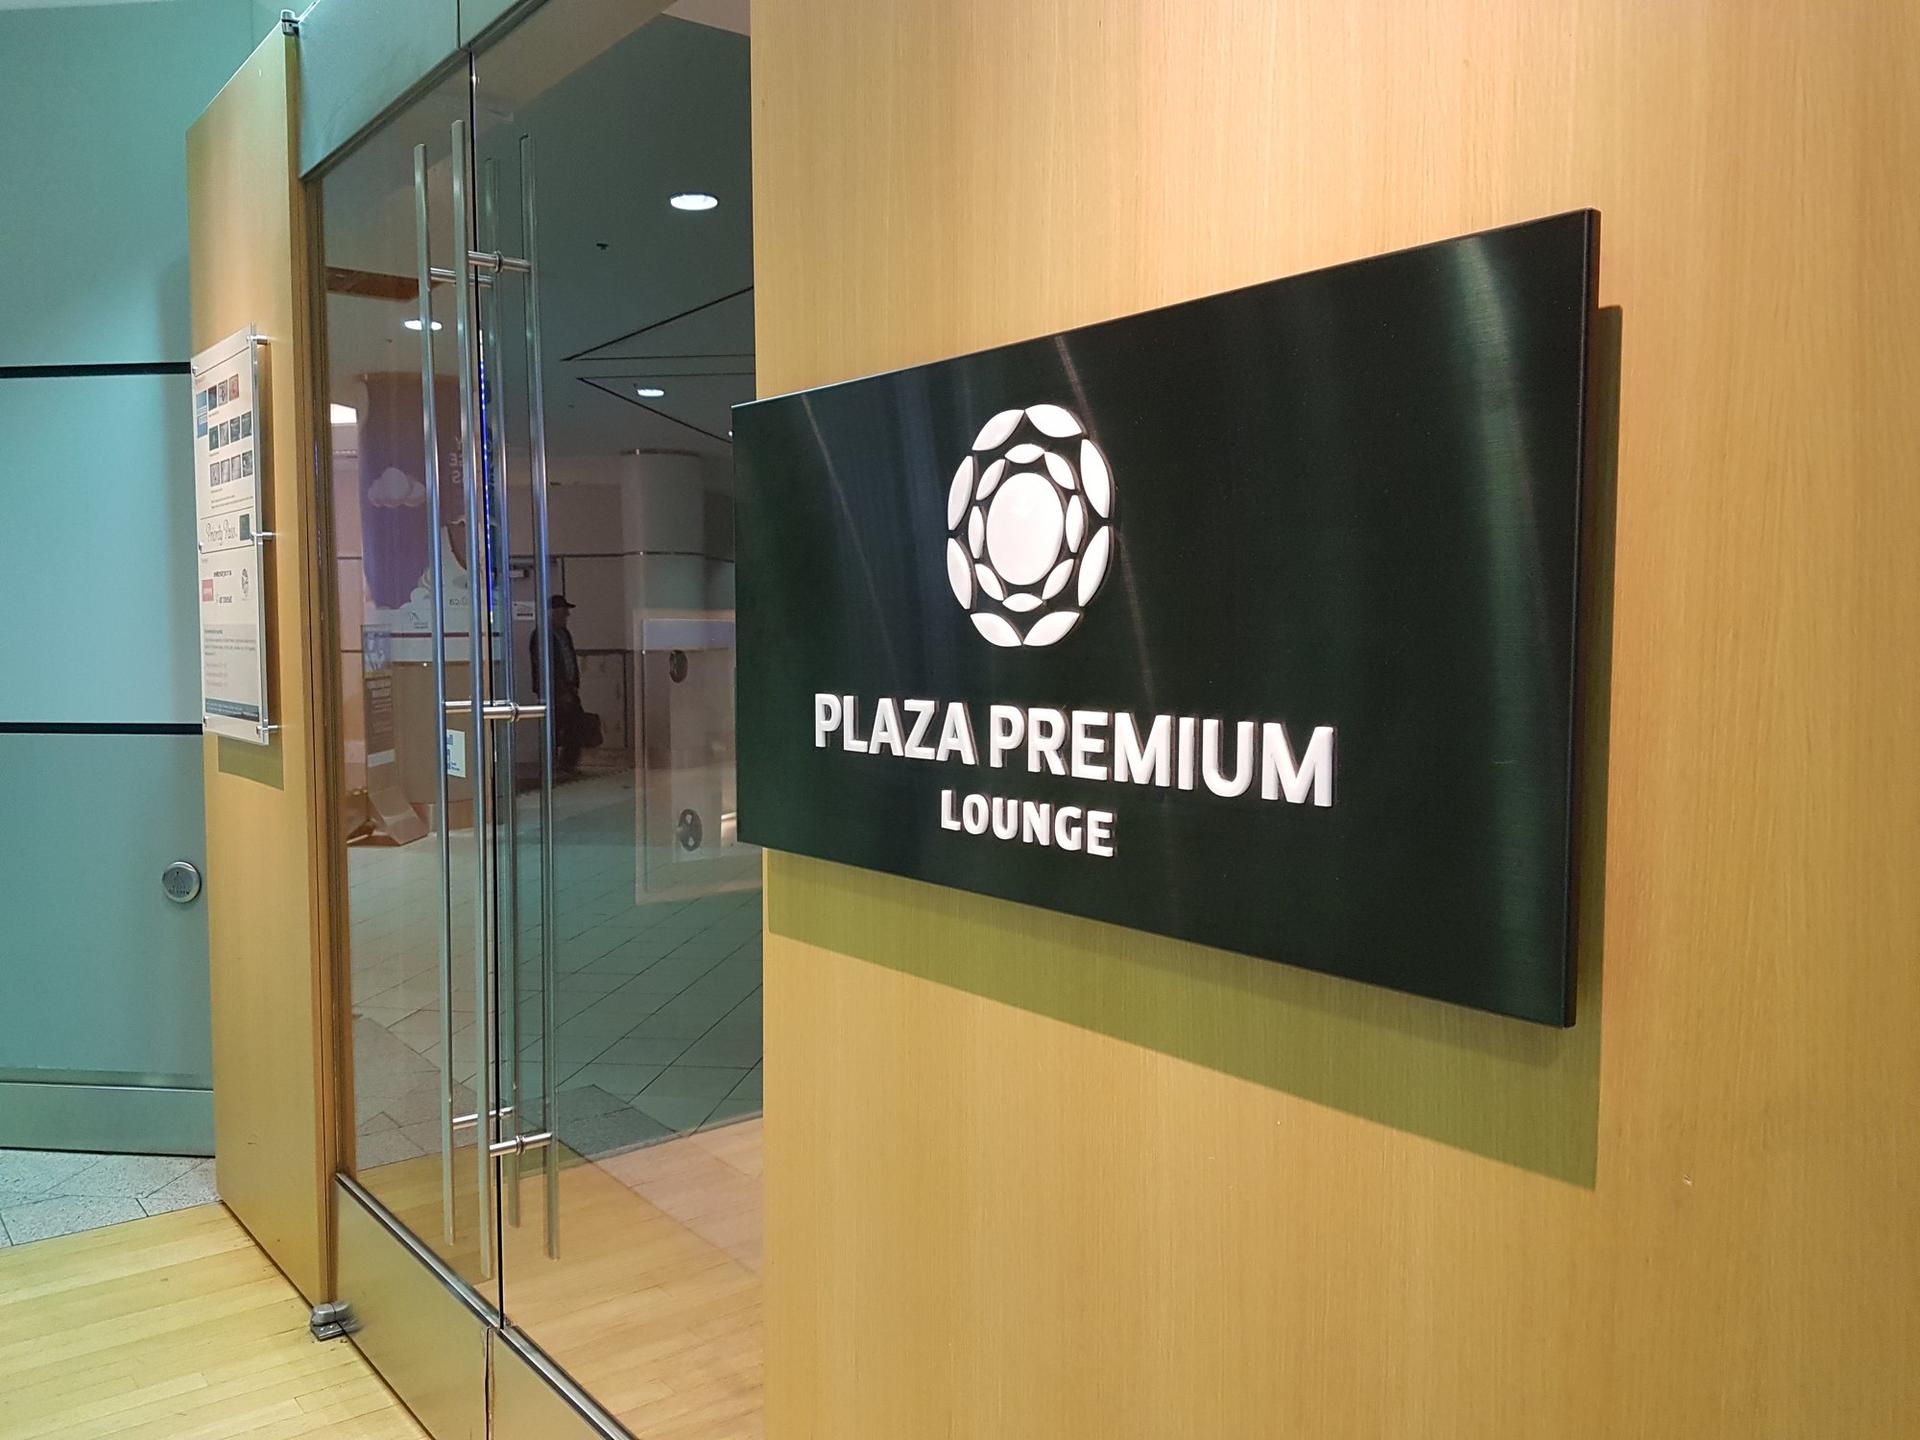 Plaza Premium Lounge image 31 of 36